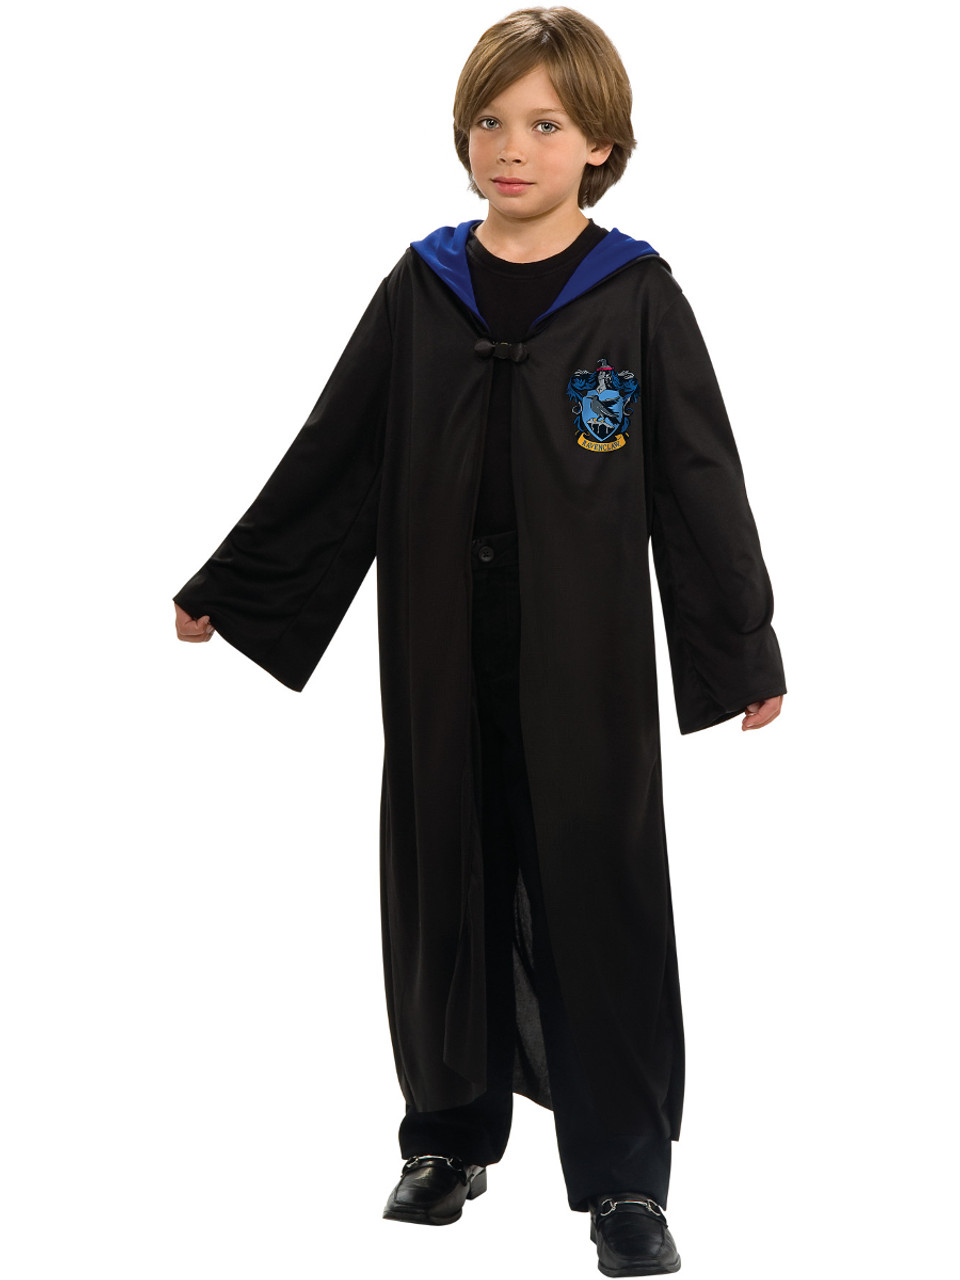 Kids Harry Potter Ravenclaw Costume Robe